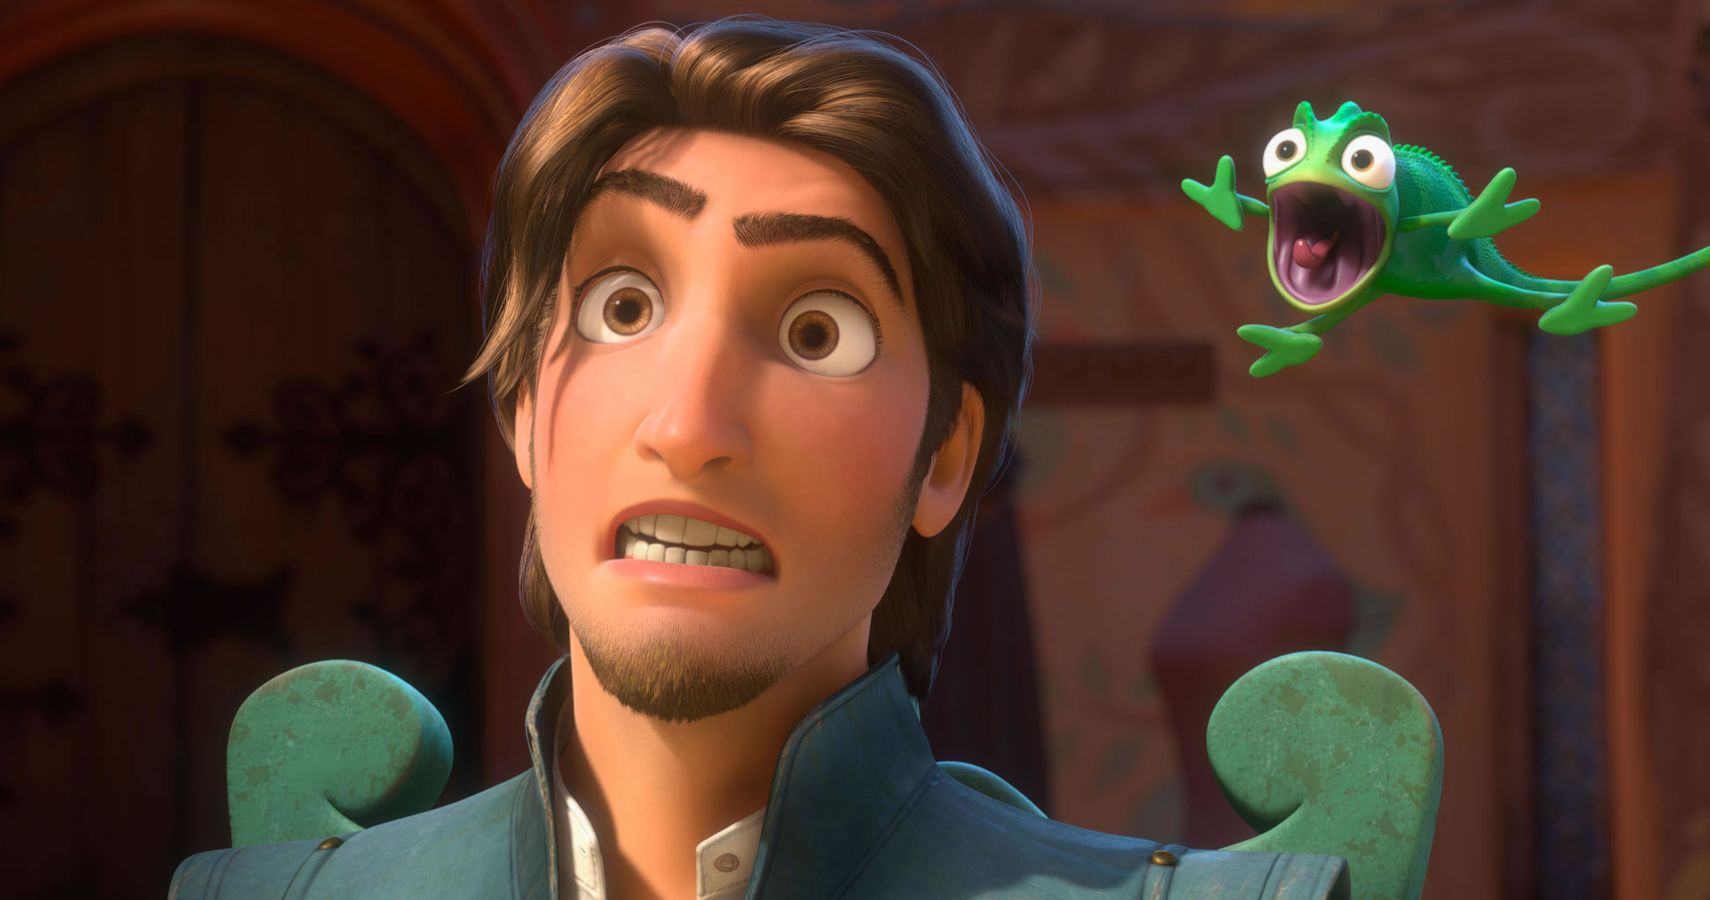 Disney: 10 Things That Don't Make Sense About Tangled